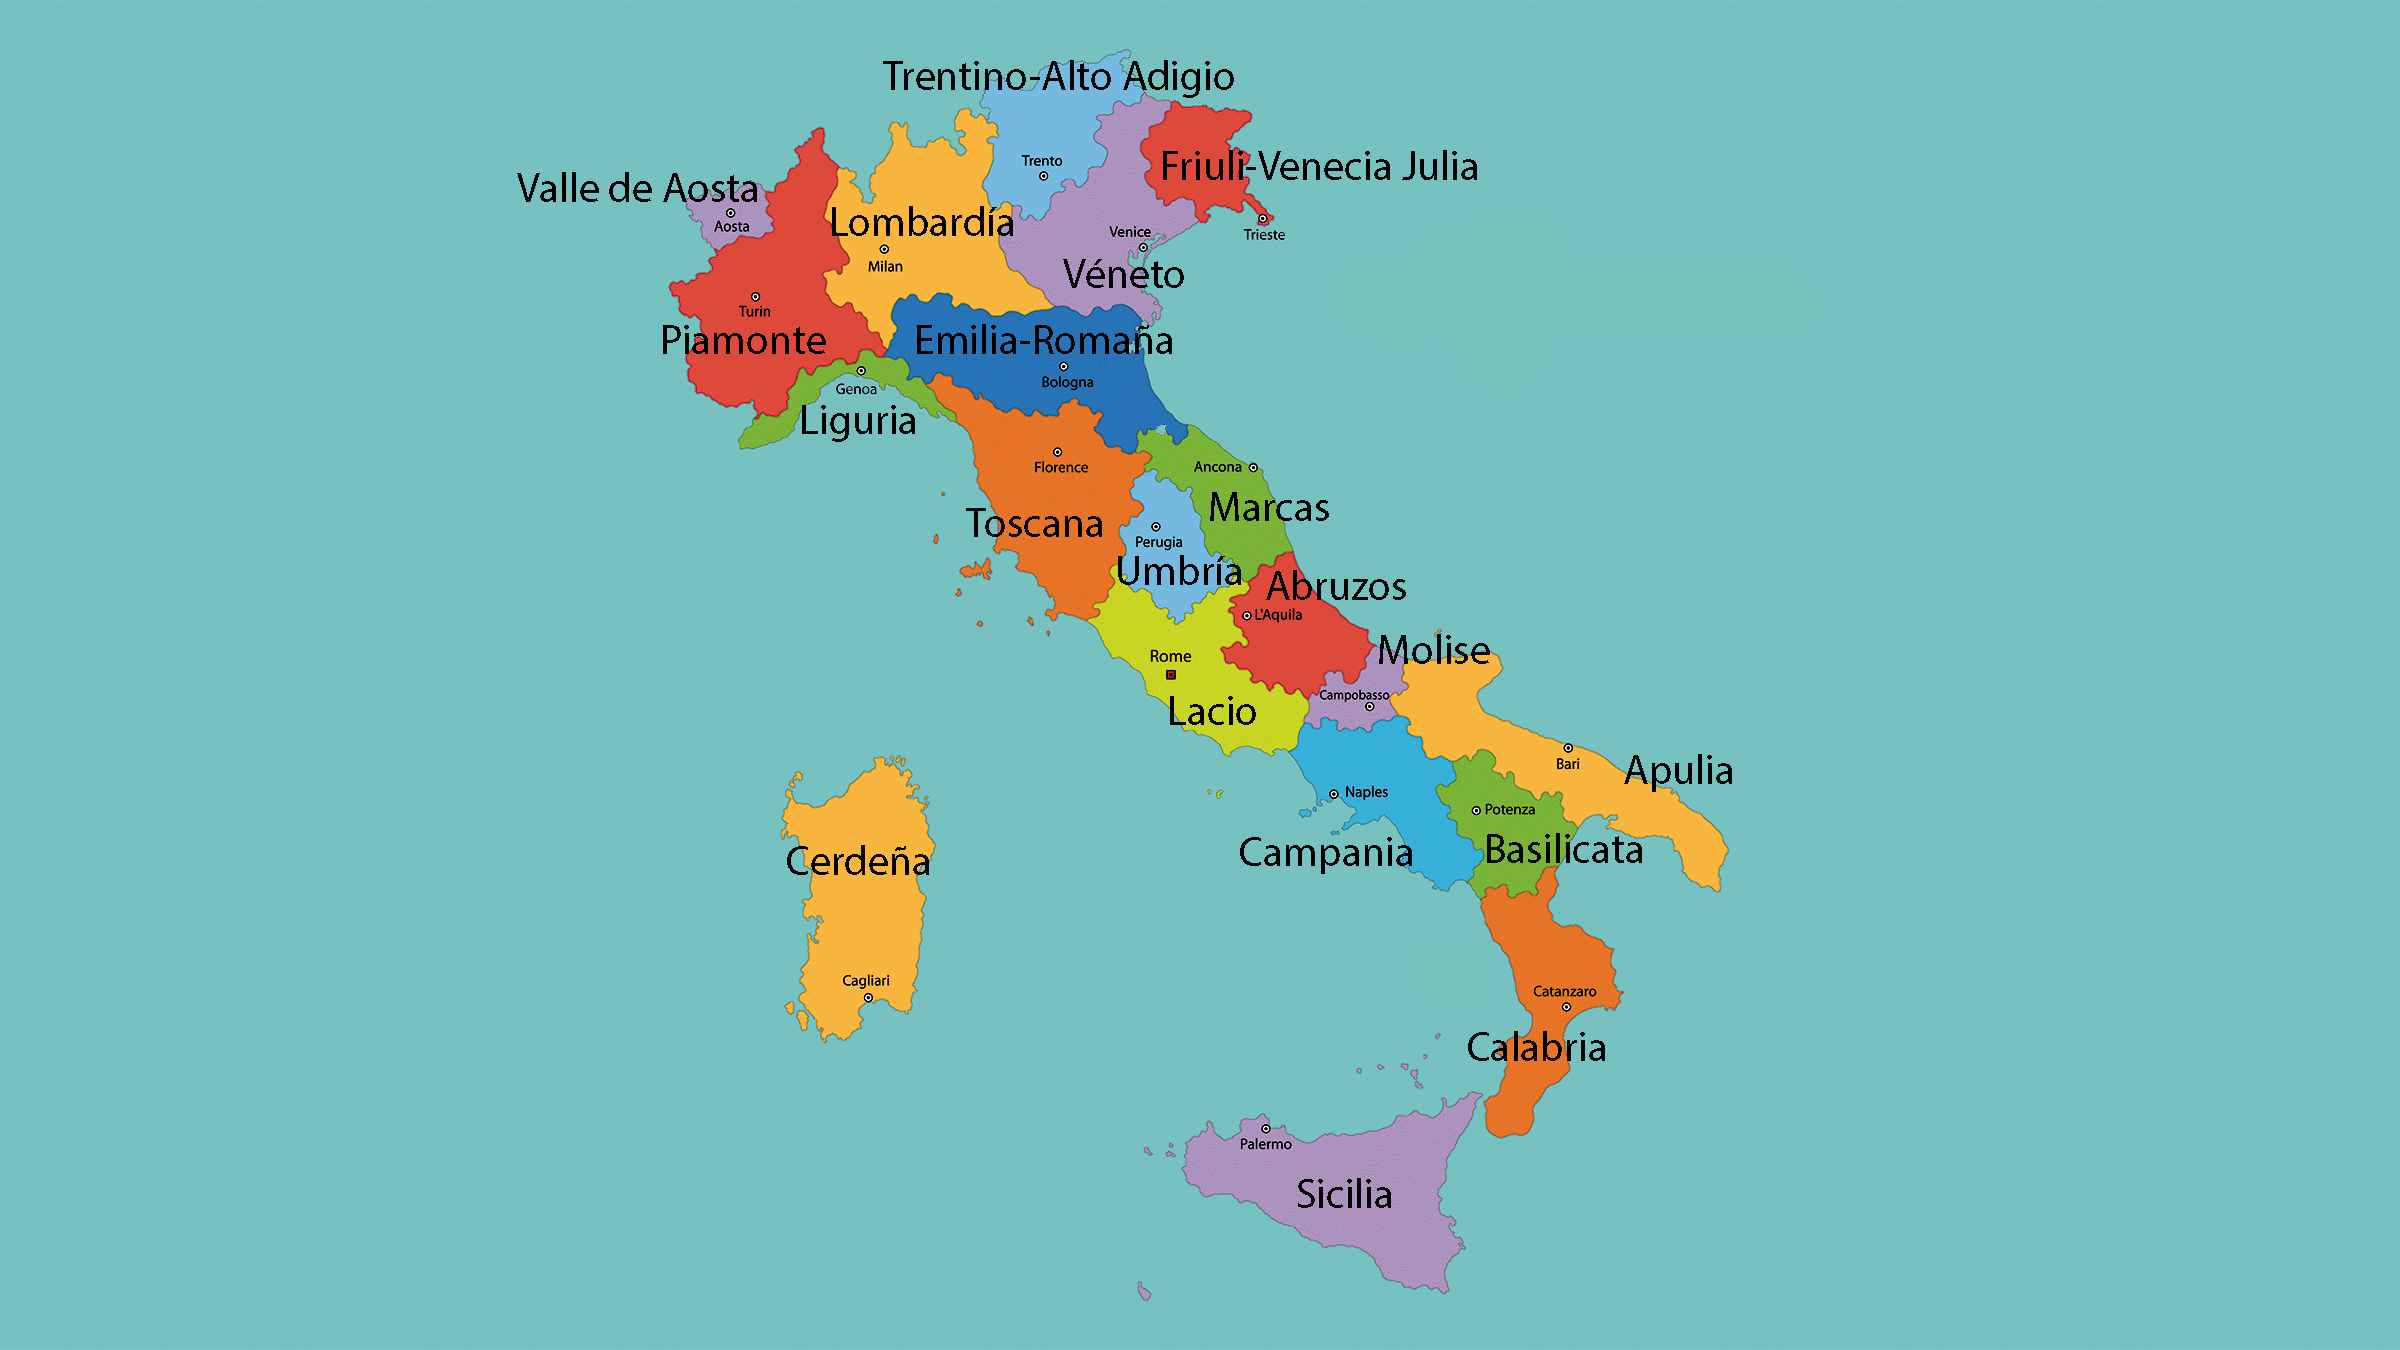 http://soymapas.com/wp-content/uploads/2010/08/mapa-italia1.jpg